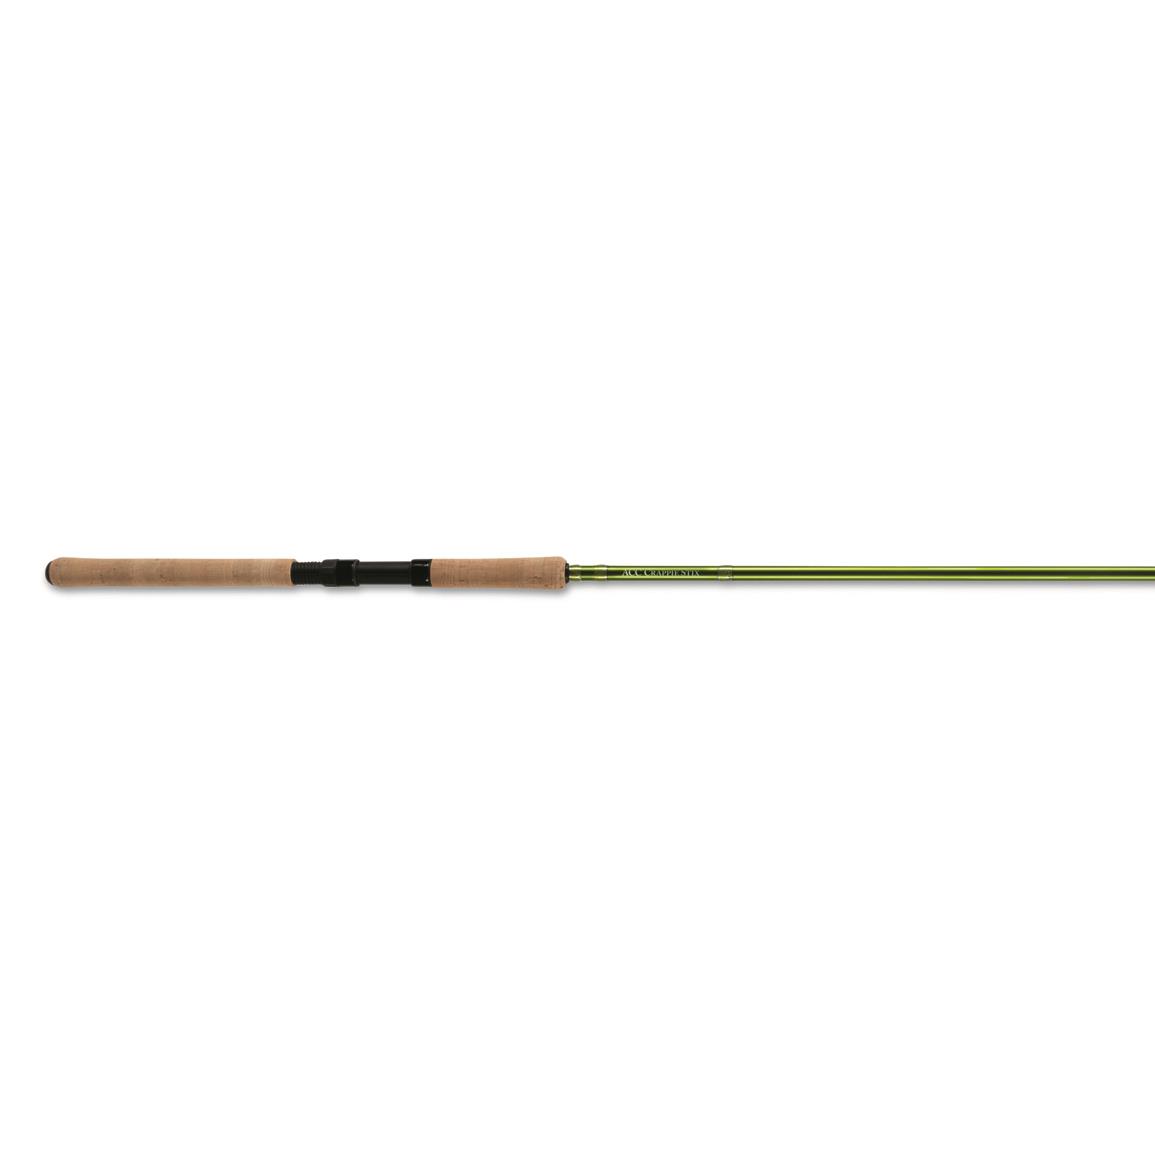 ACC Crappie Stix GS12M Green Series Jigging Rod, 12' Length, Medium Power, Moderate Action, 2 Pieces